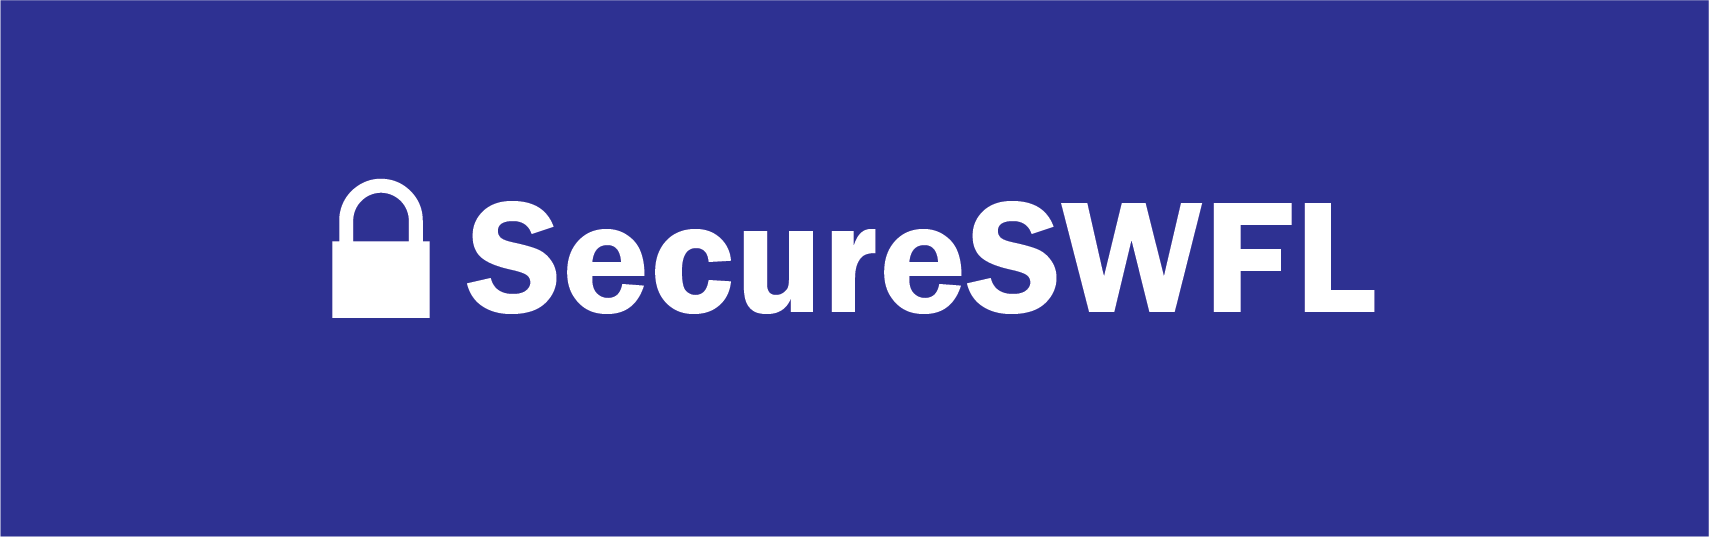 SecureSWFL Logo